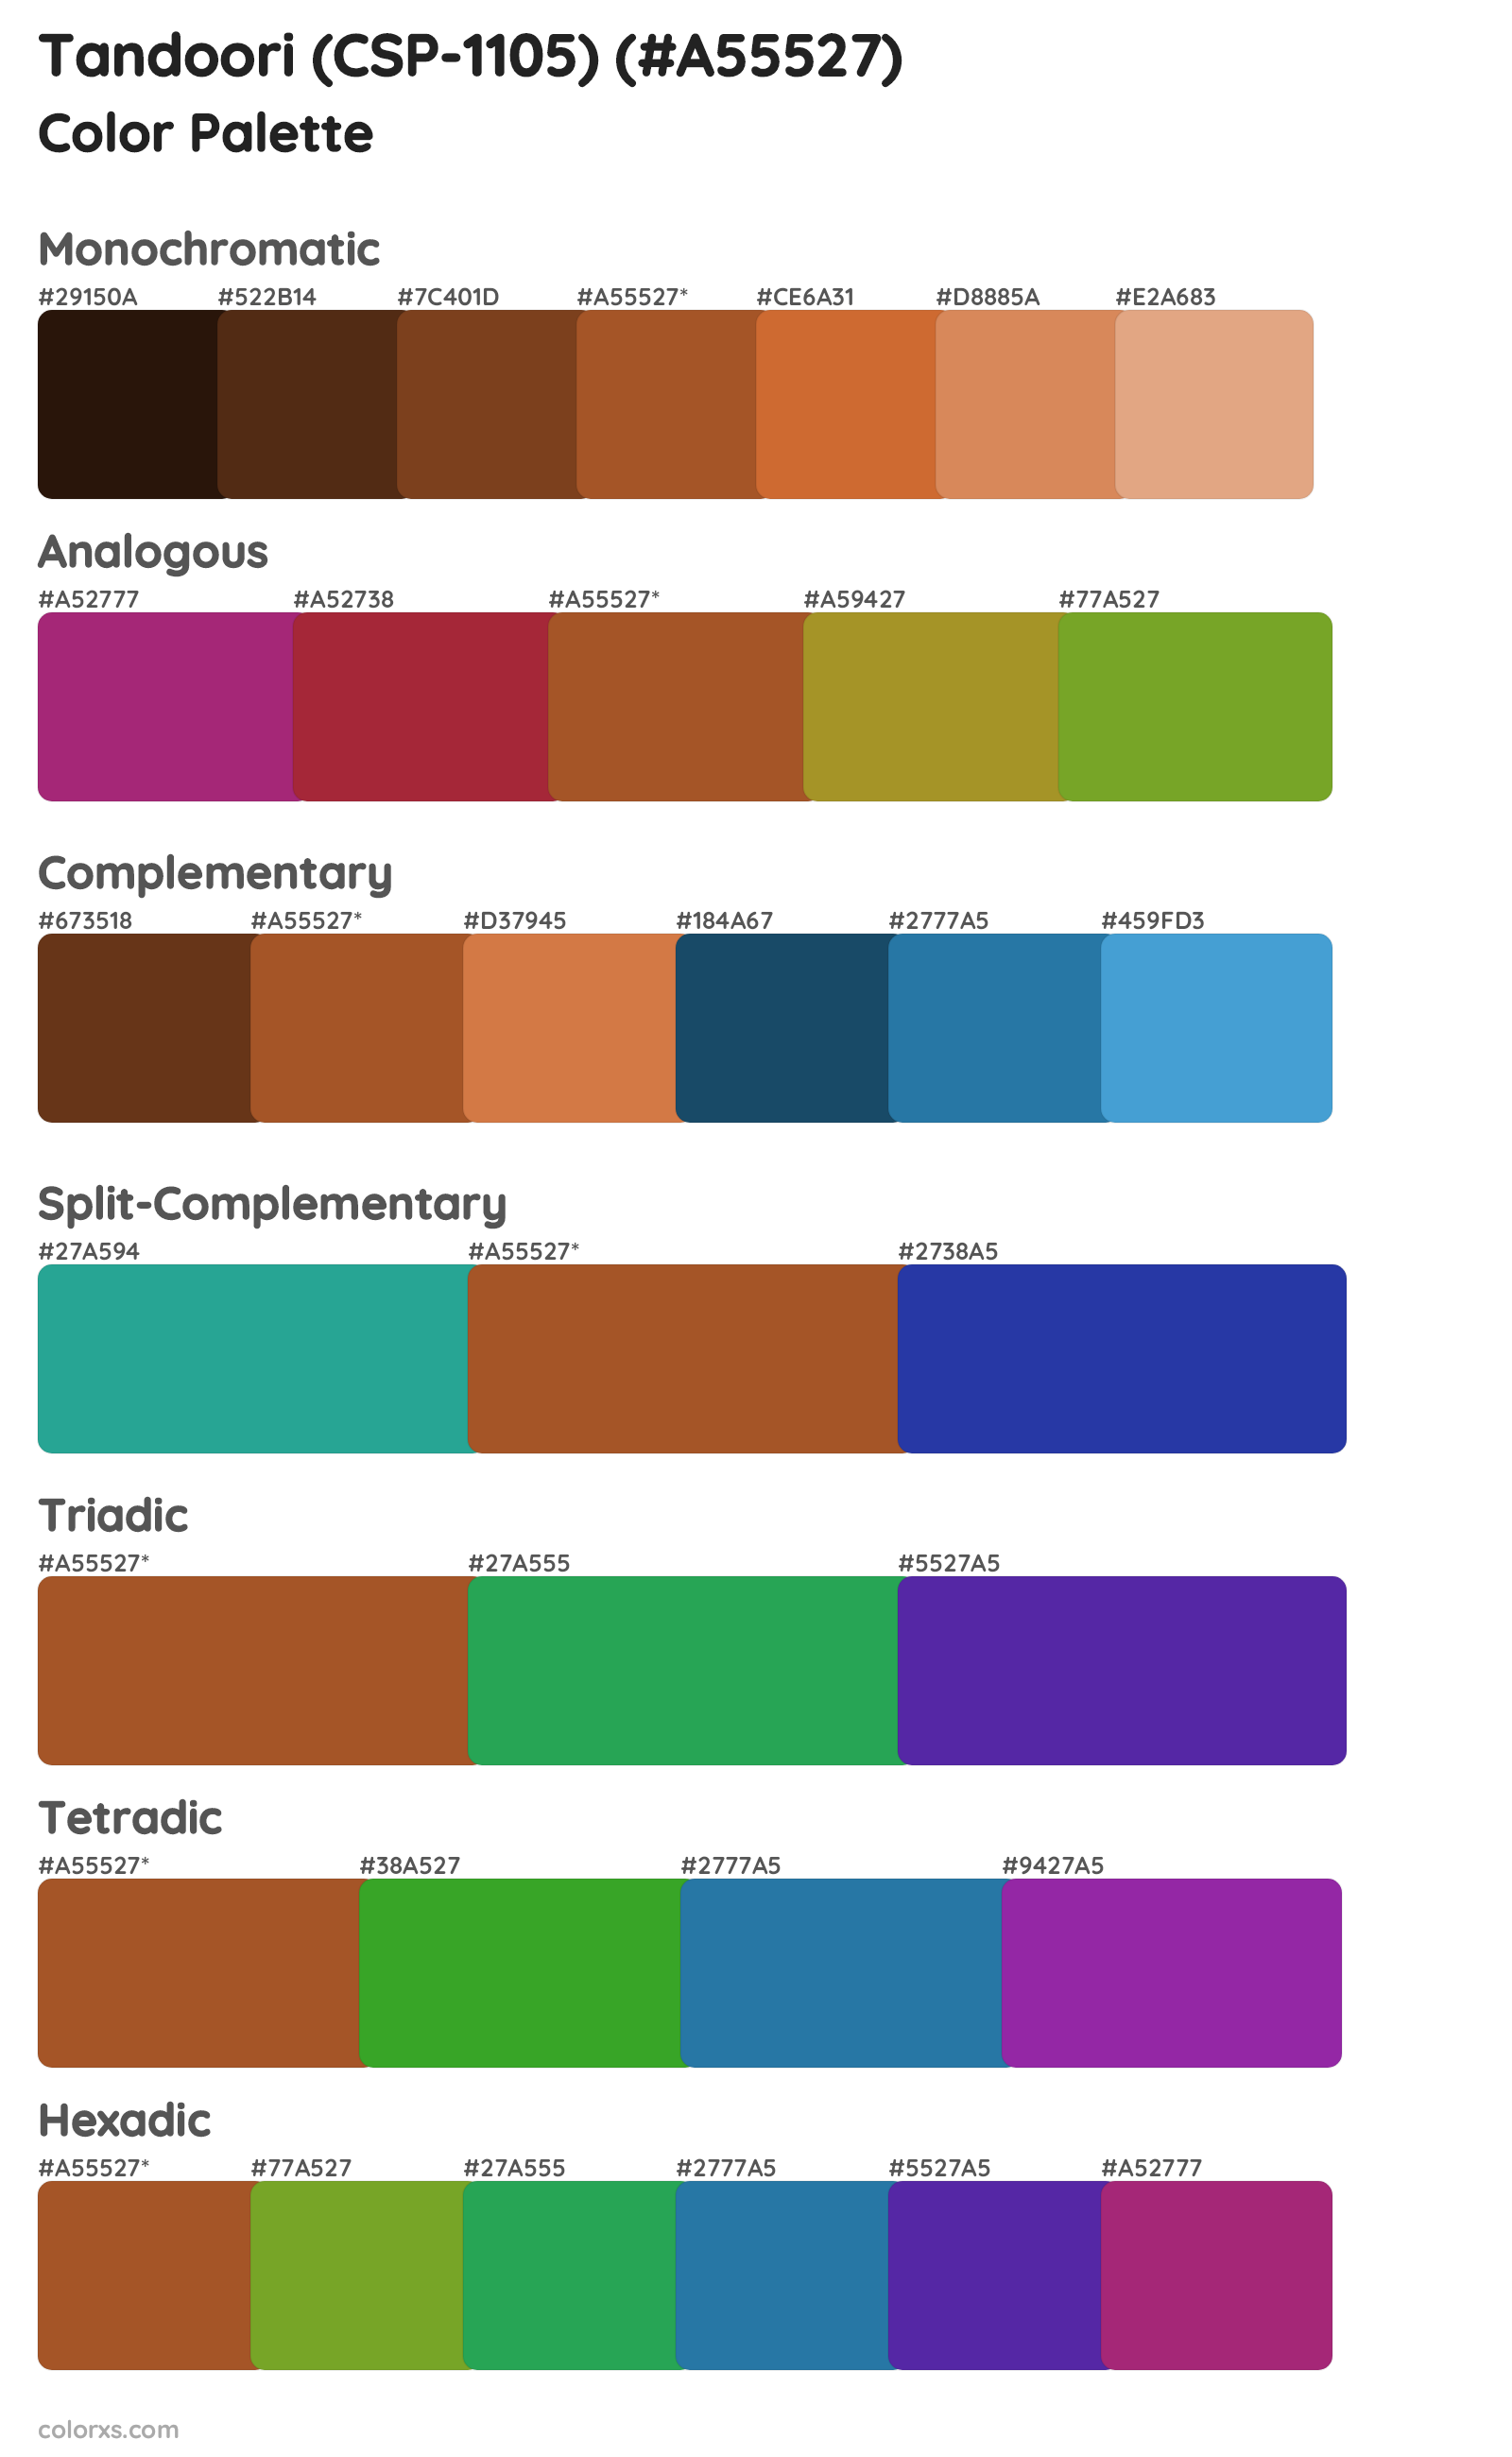 Tandoori (CSP-1105) Color Scheme Palettes